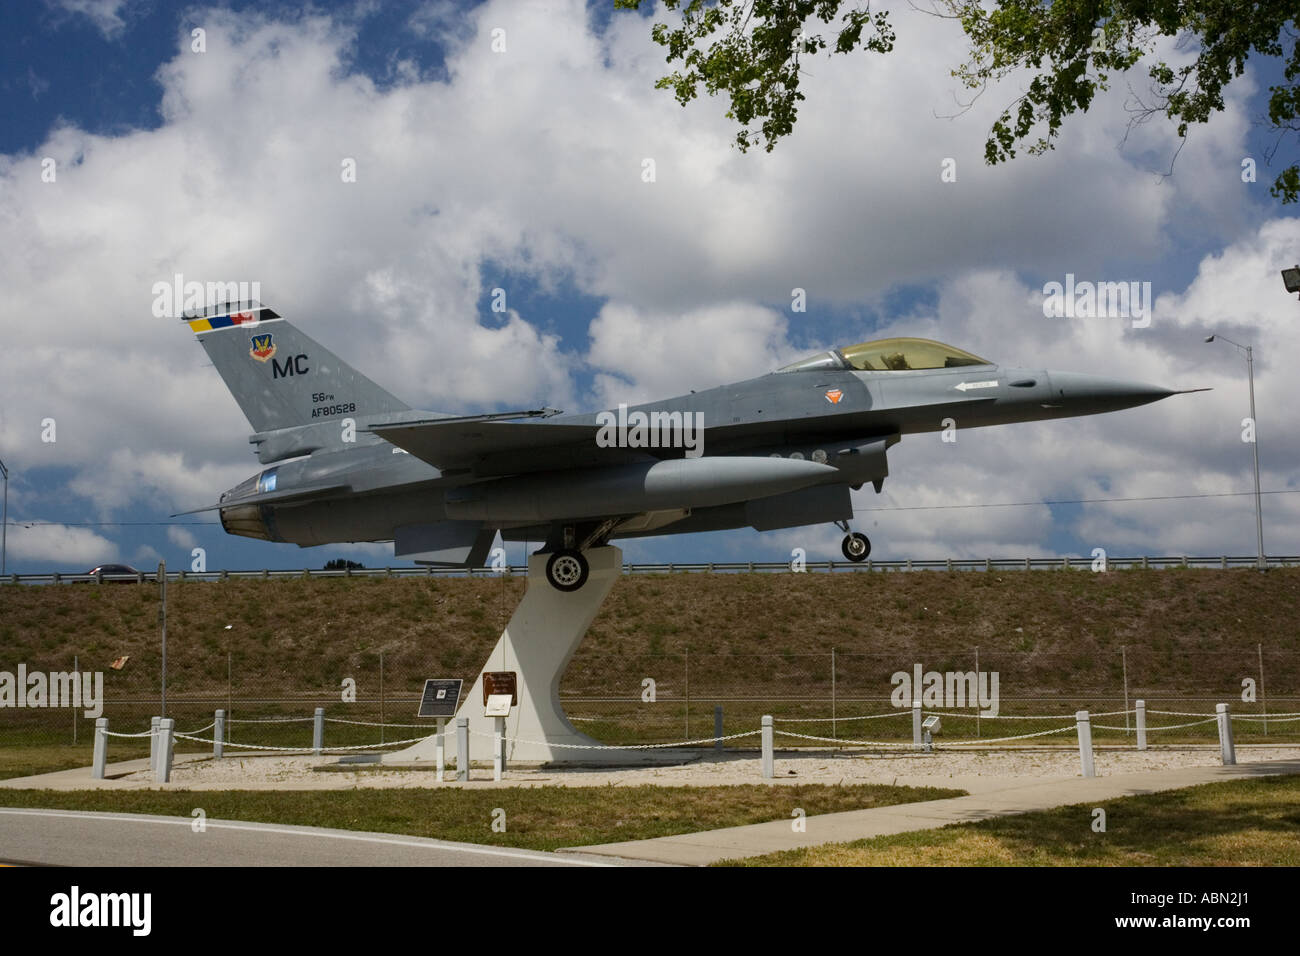 General Dynamics F16 Fighting Falcon einsitzige Kampfjet 56. Fighter Wing USAF Tor zu bewachen, am Erinnerungspark Düsenjäger Stockfoto